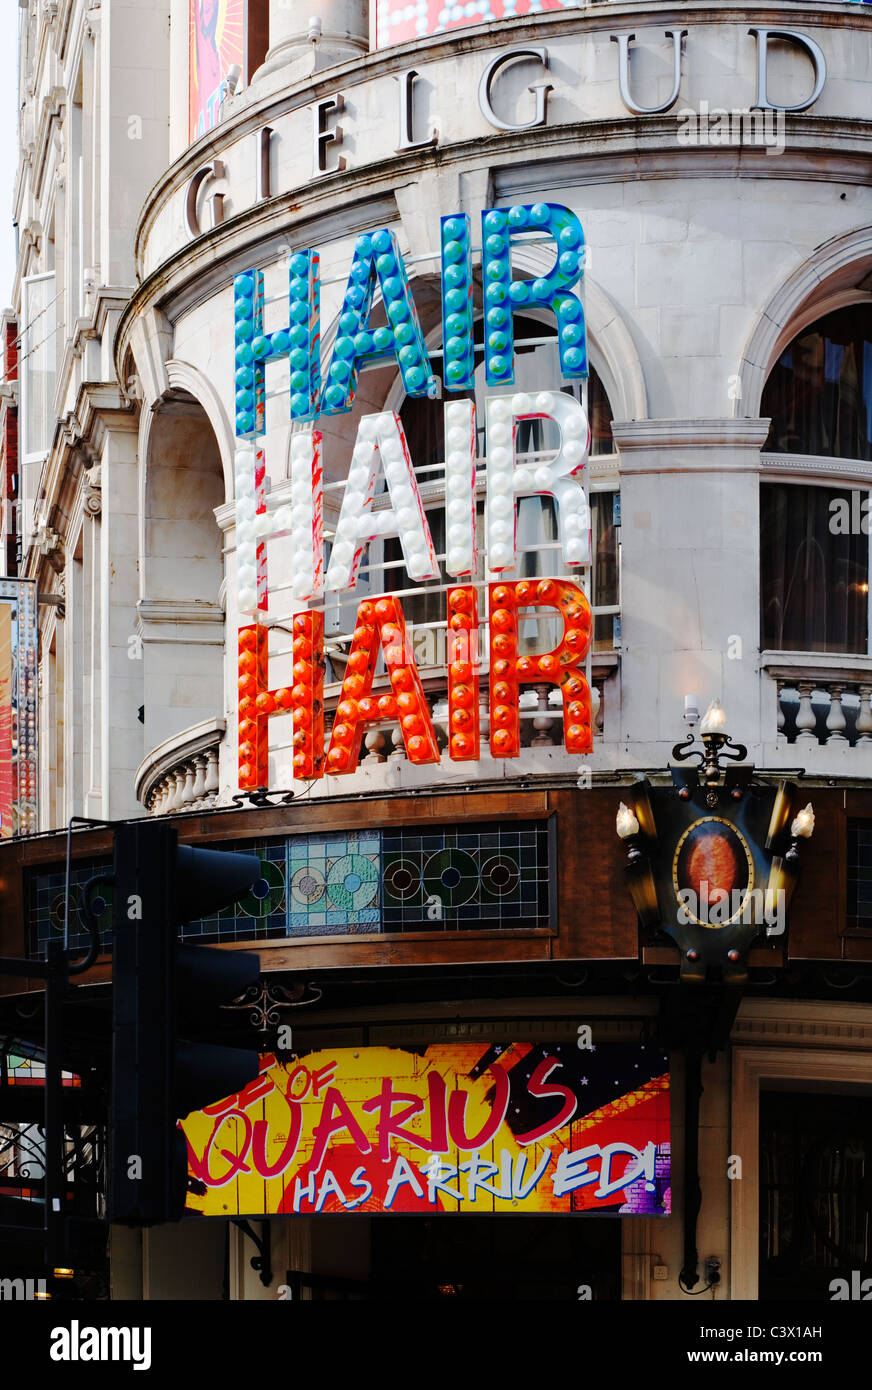 'Hair' the Musical, Gielgud theatre, Shaftesbury Avenue, London, England, UK, Europe Stock Photo